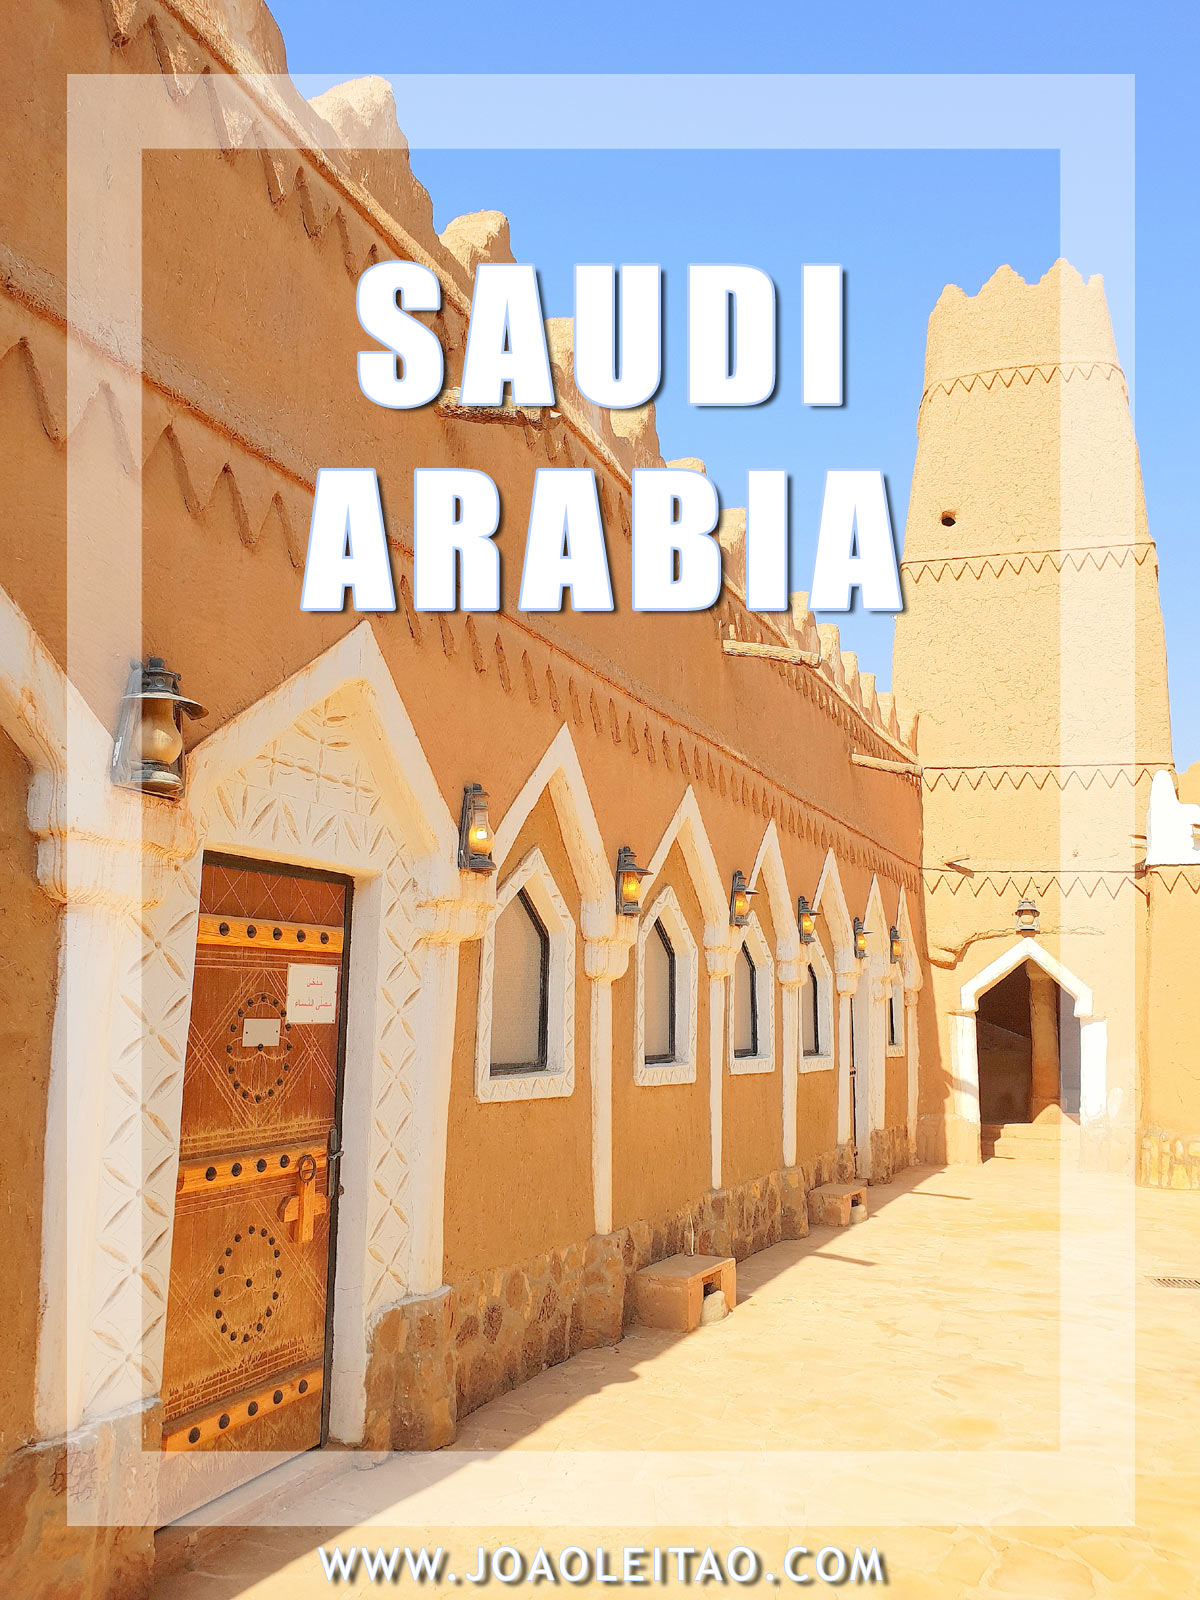 12 Beautiful Old Mud-Brick Villages in Saudi Arabia